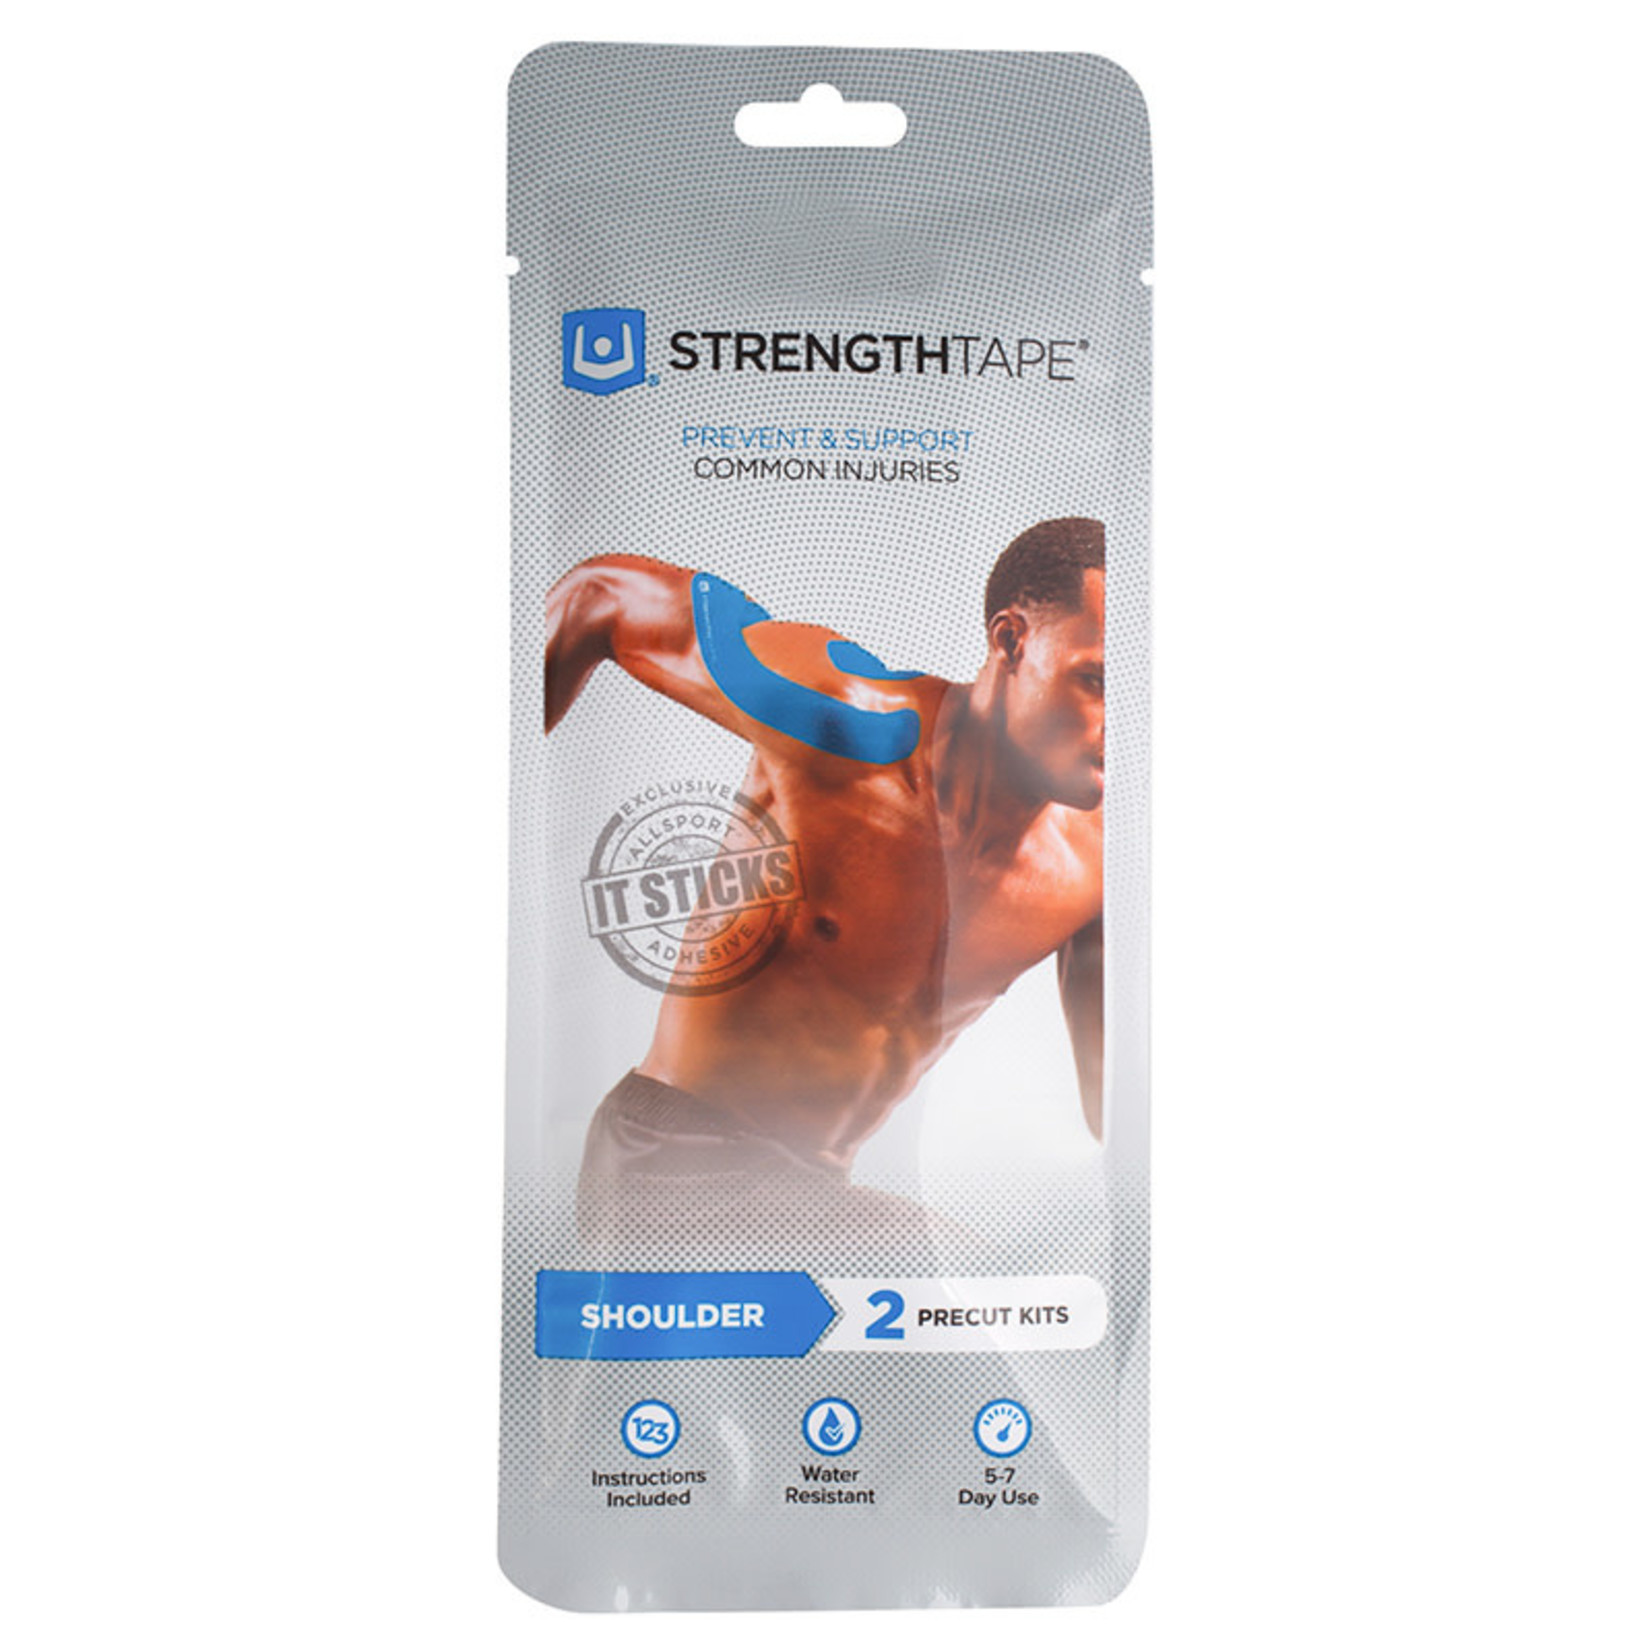 StrengthTape Shoulder 6 Precut Strips